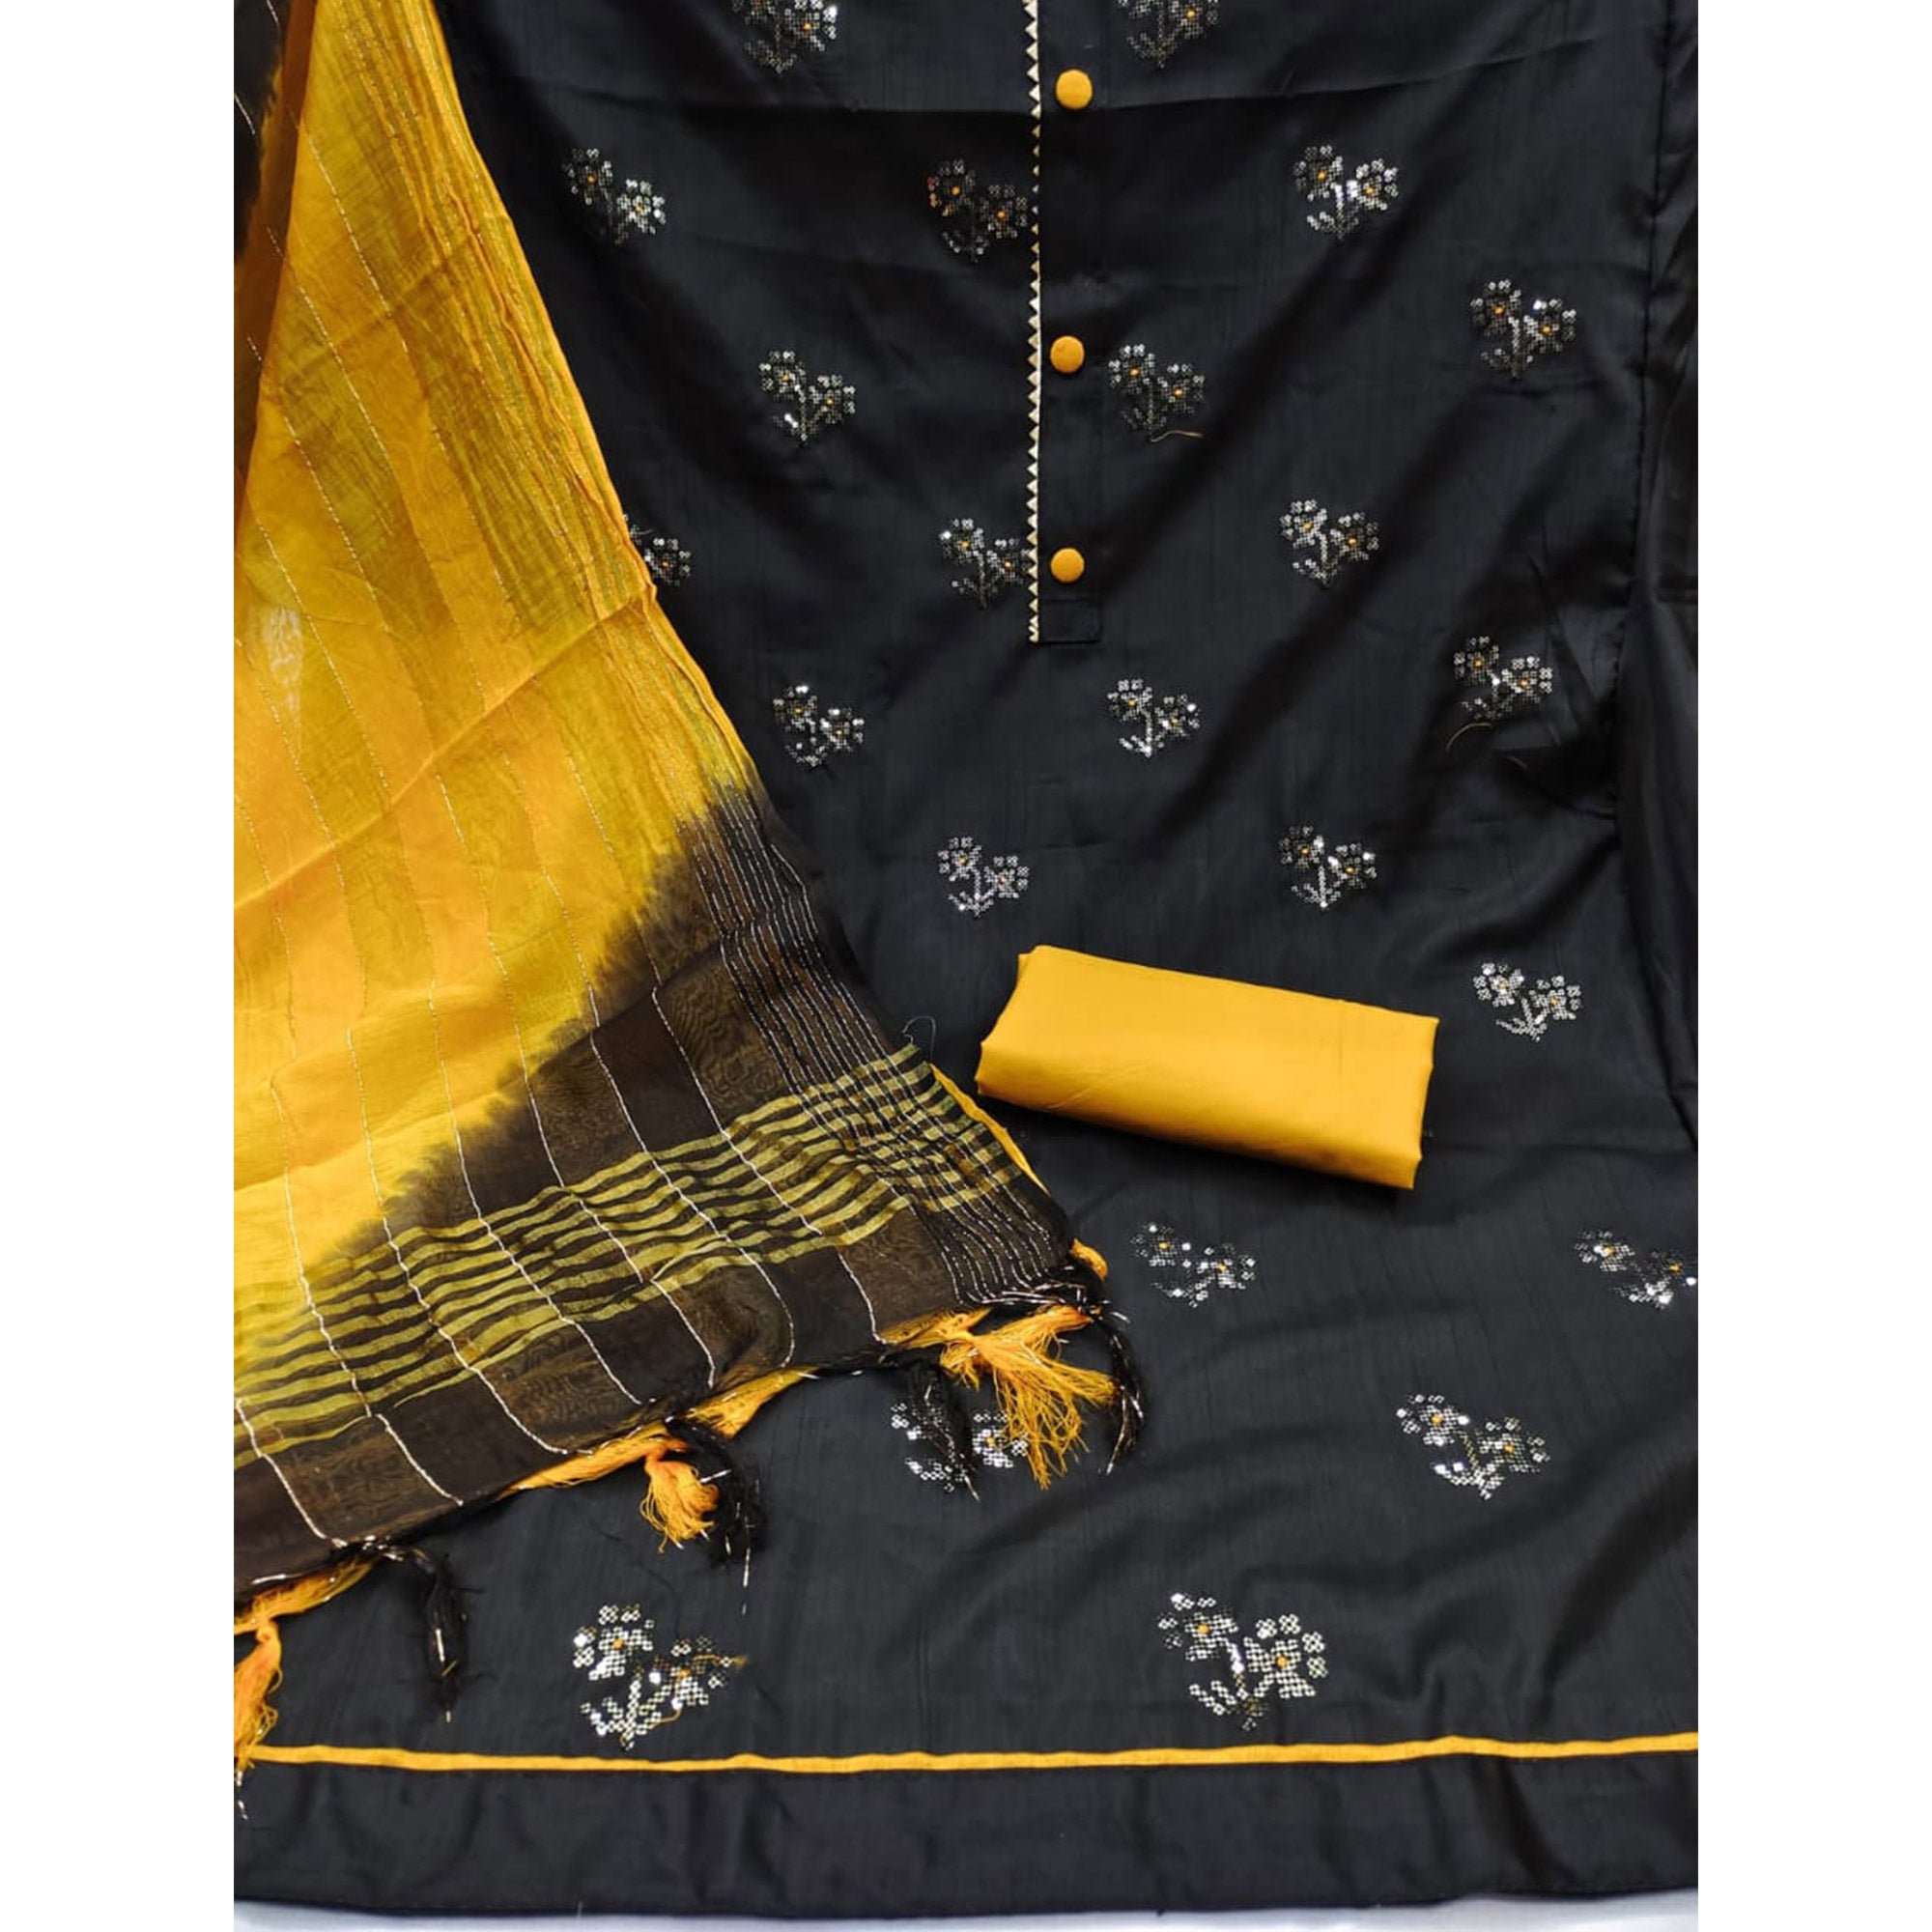 Black Floral Sequins Embroidered Art Silk Dress Material